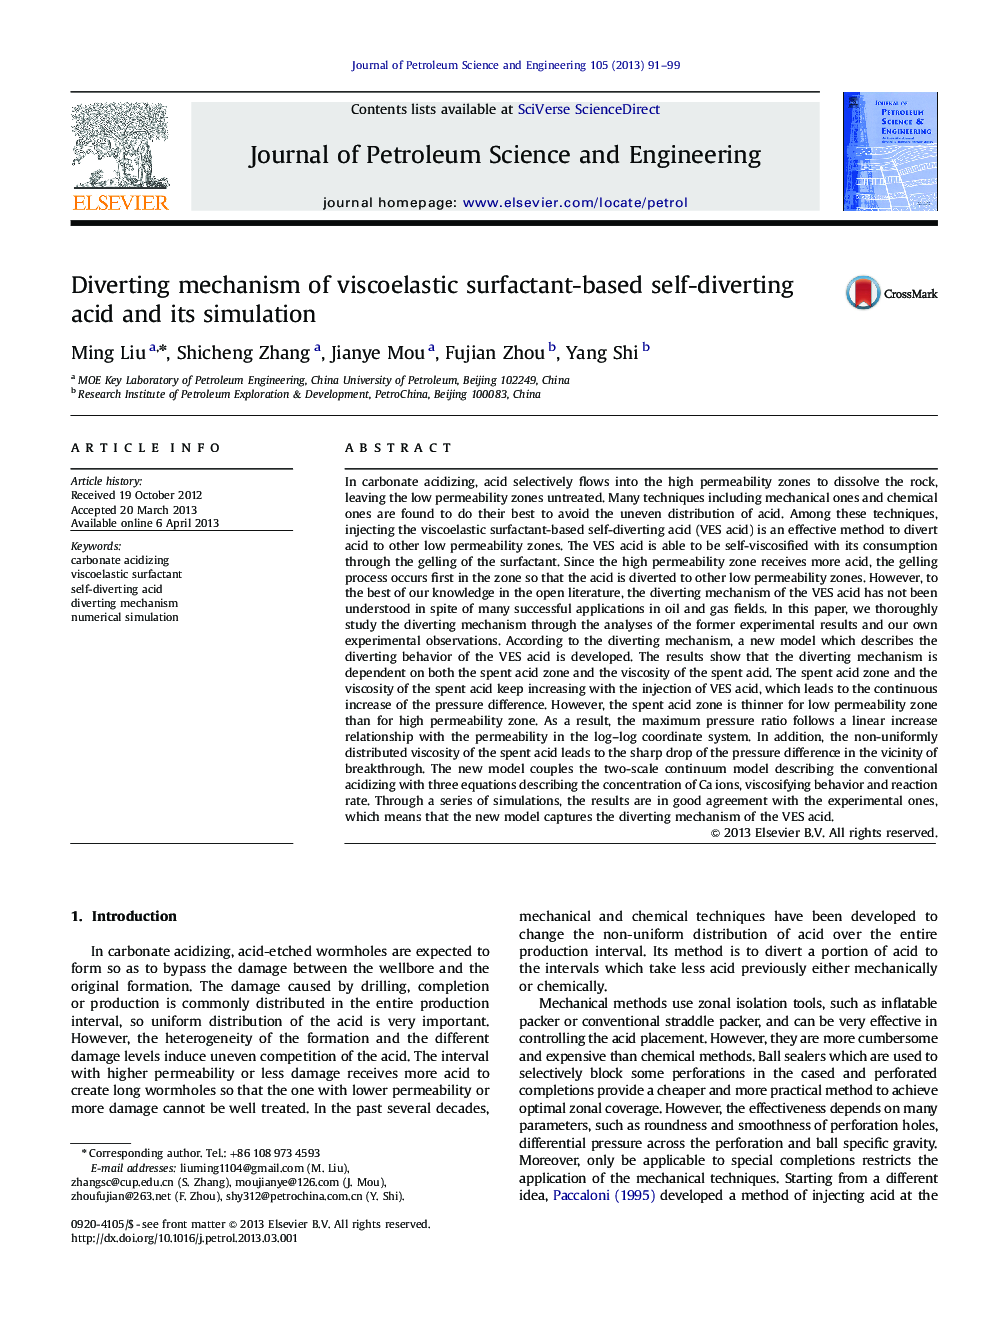 Diverting mechanism of viscoelastic surfactant-based self-diverting acid and its simulation